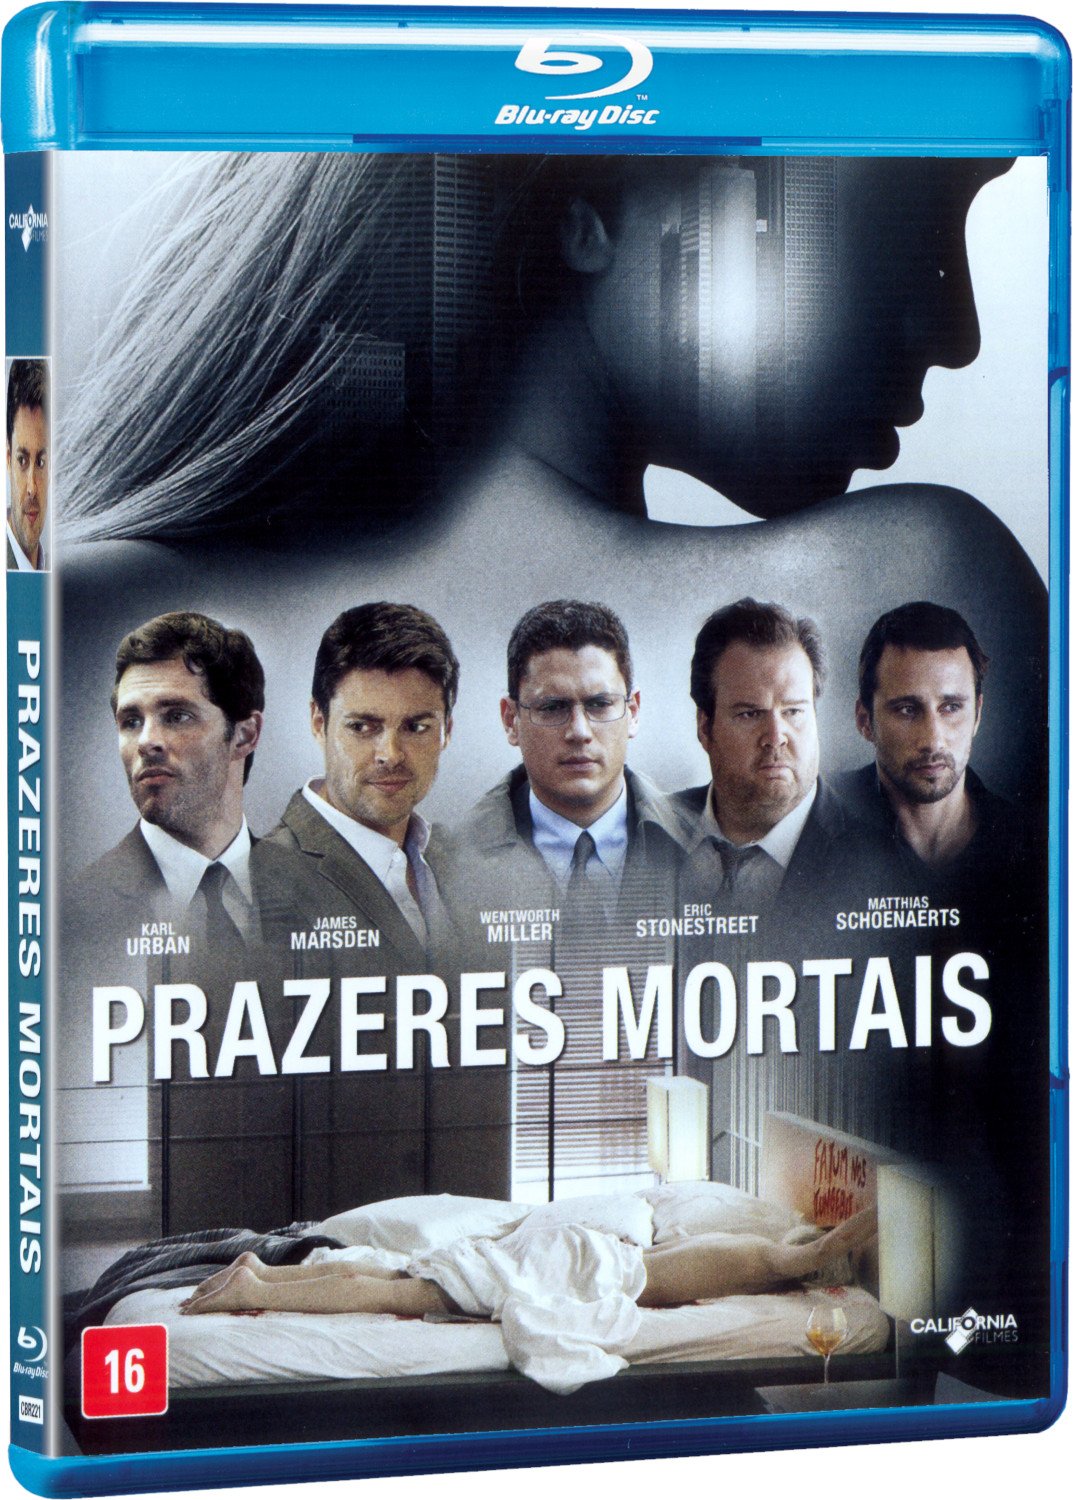 PRAZERES MORTAIS - Blu-ray